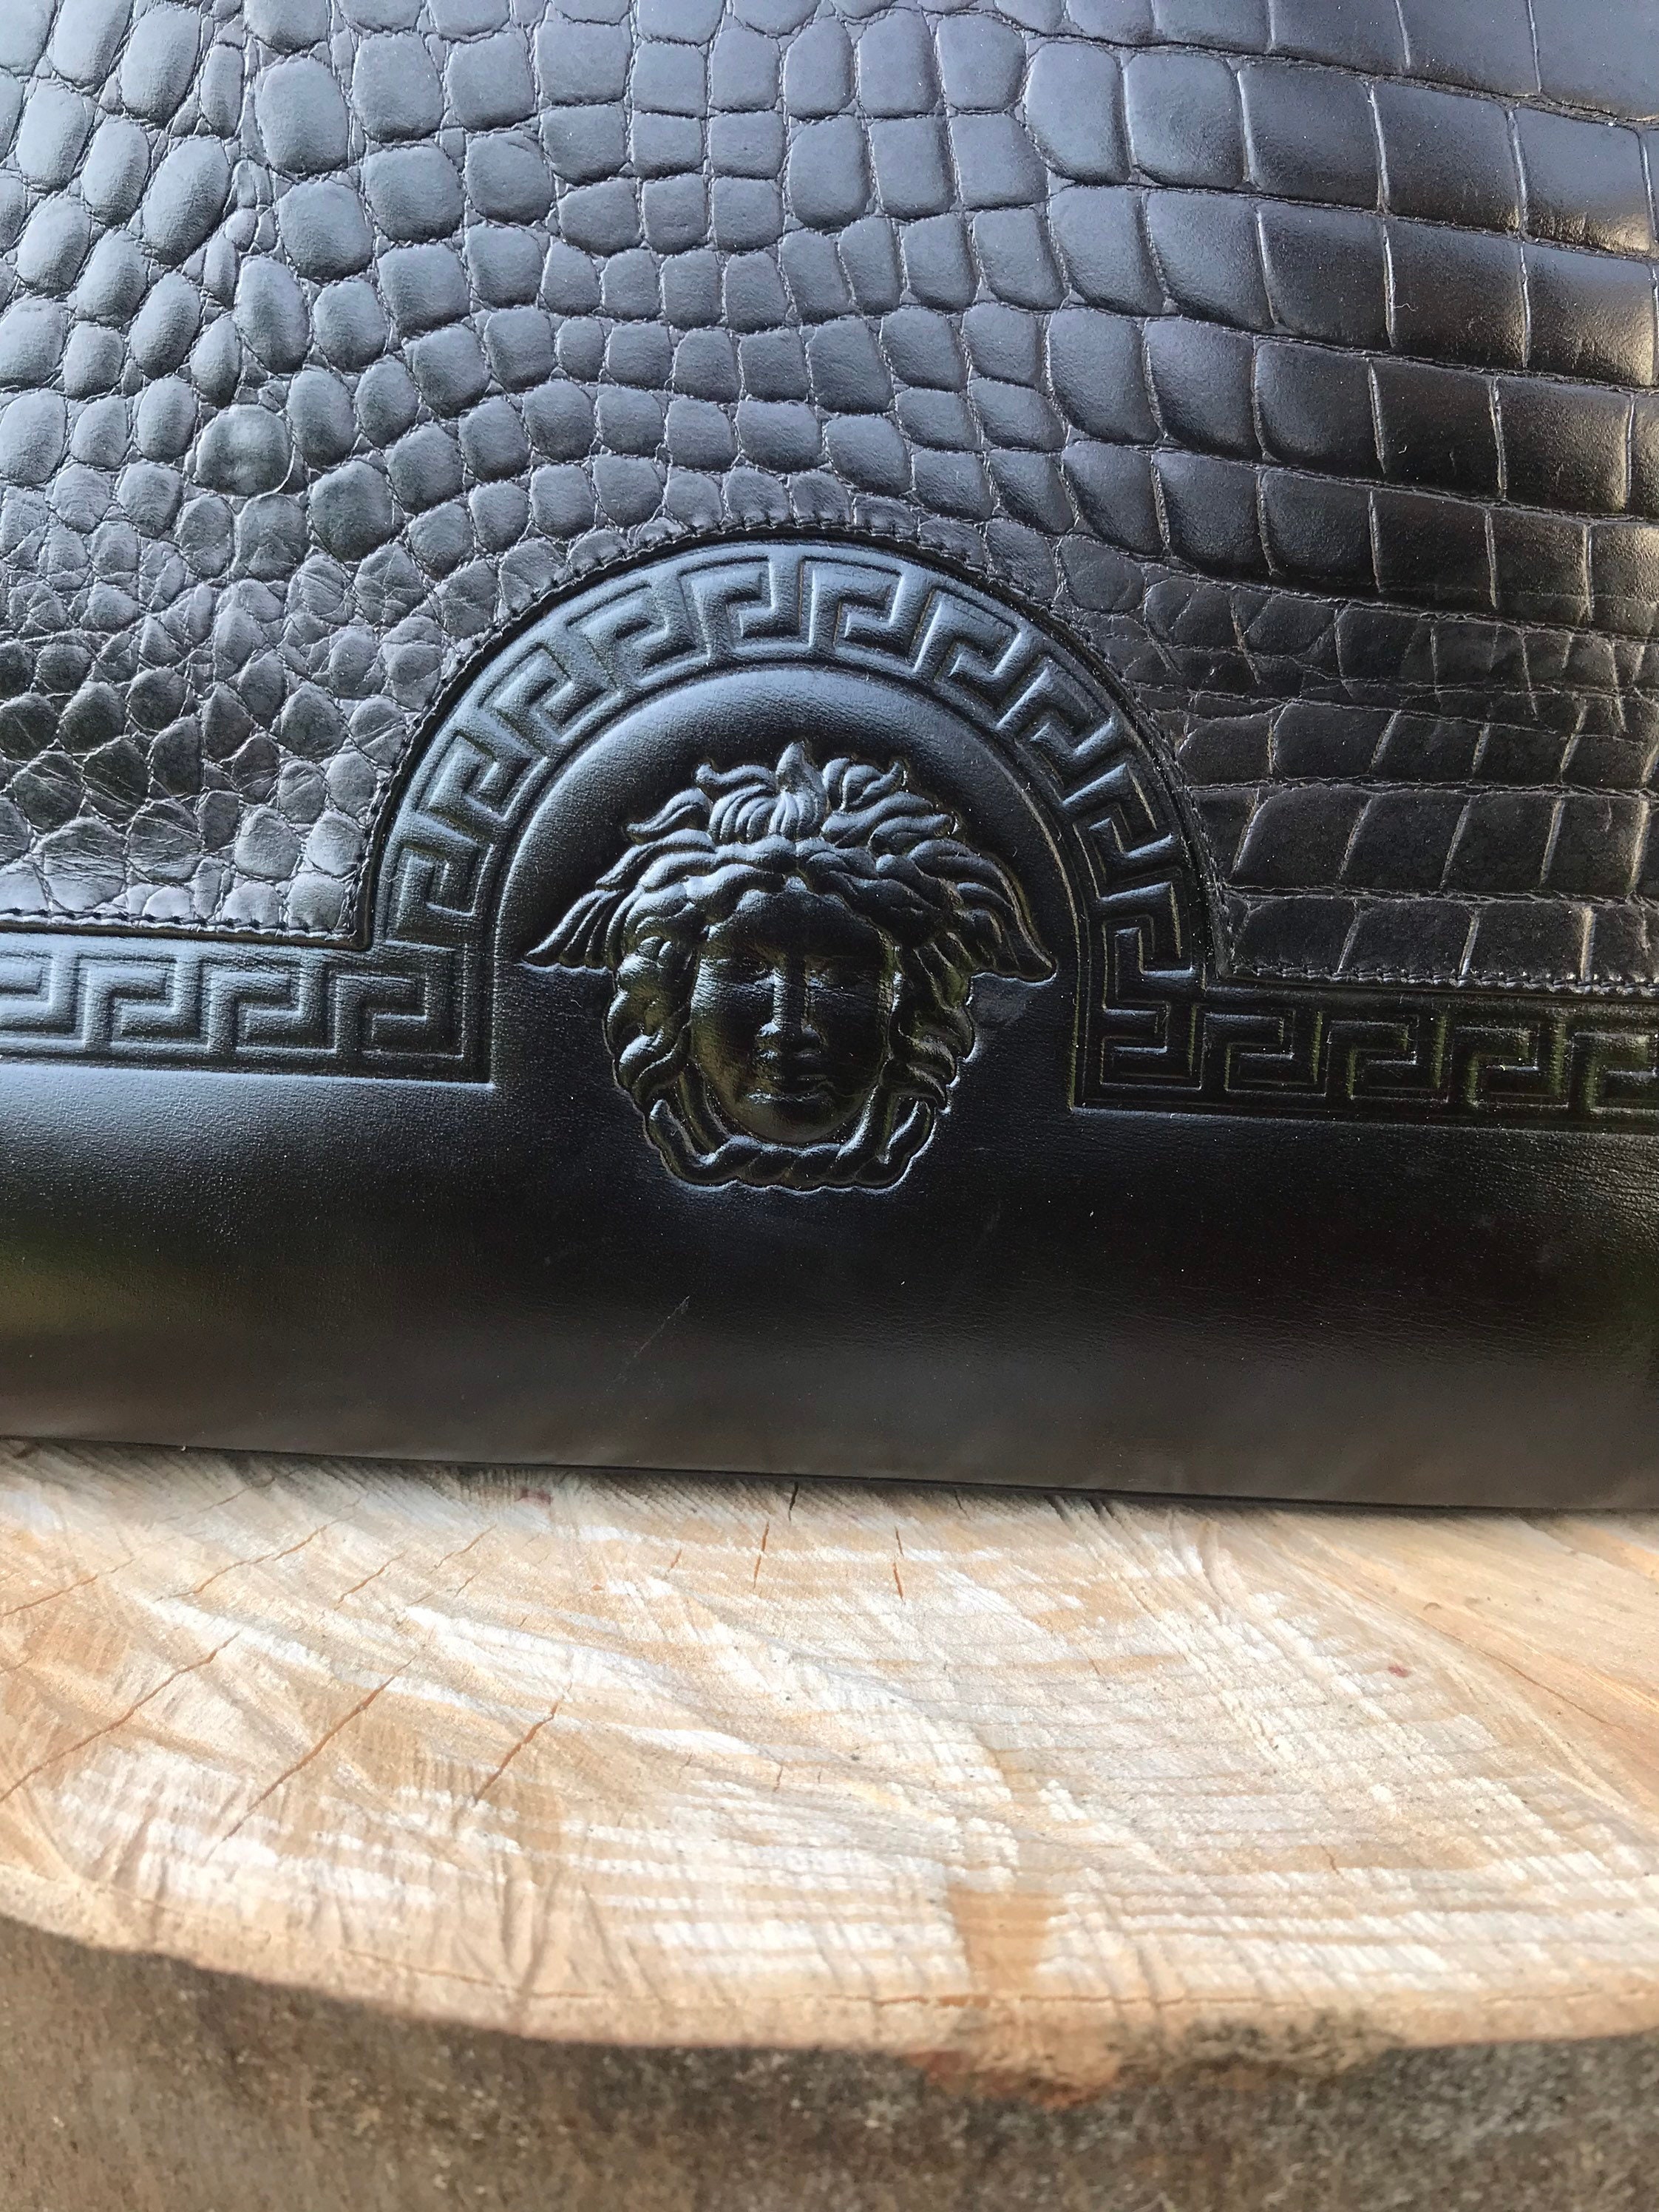 Vintage Gianni Versace Bag Black Natural Leather Embossed 